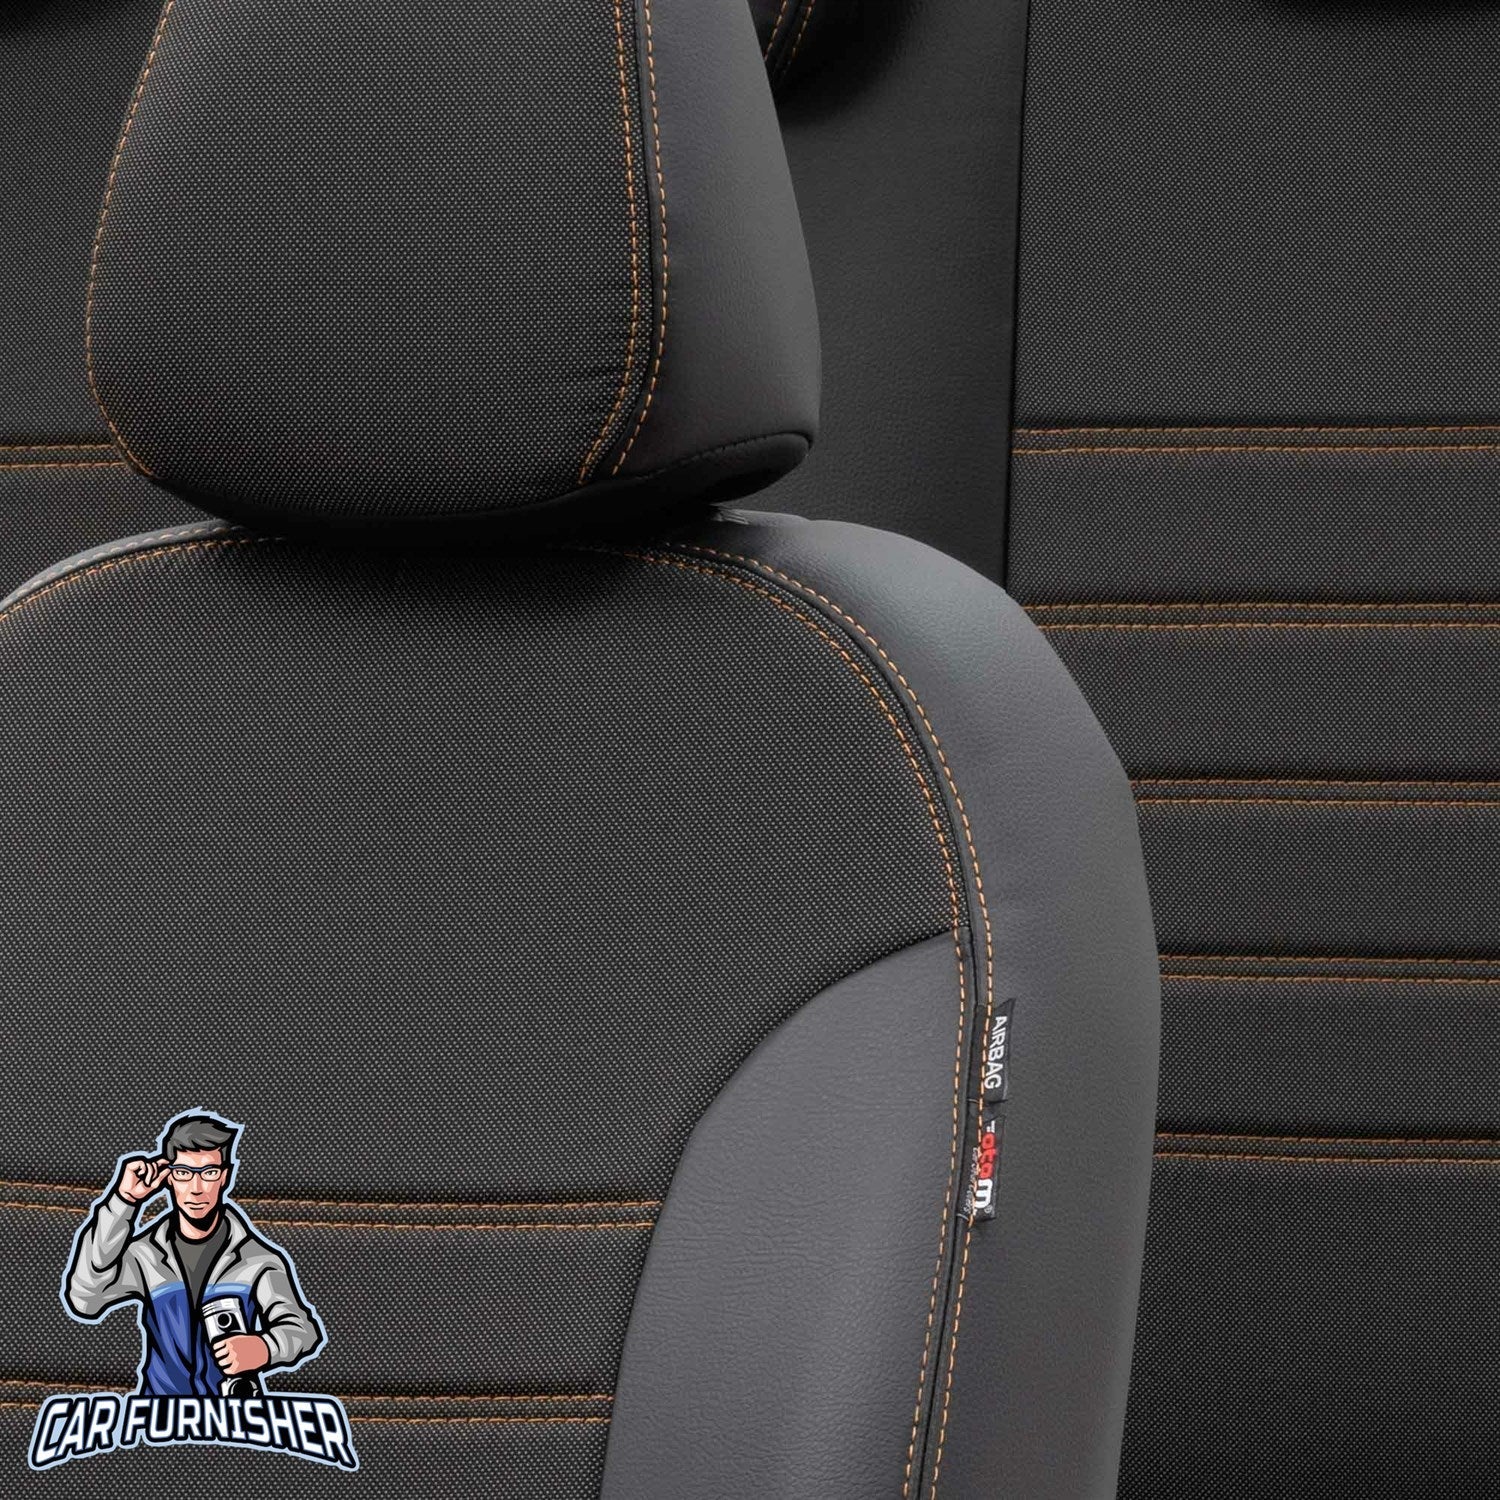 Volkswagen Tiguan Seat Cover Paris Leather & Jacquard Design Dark Beige Leather & Jacquard Fabric